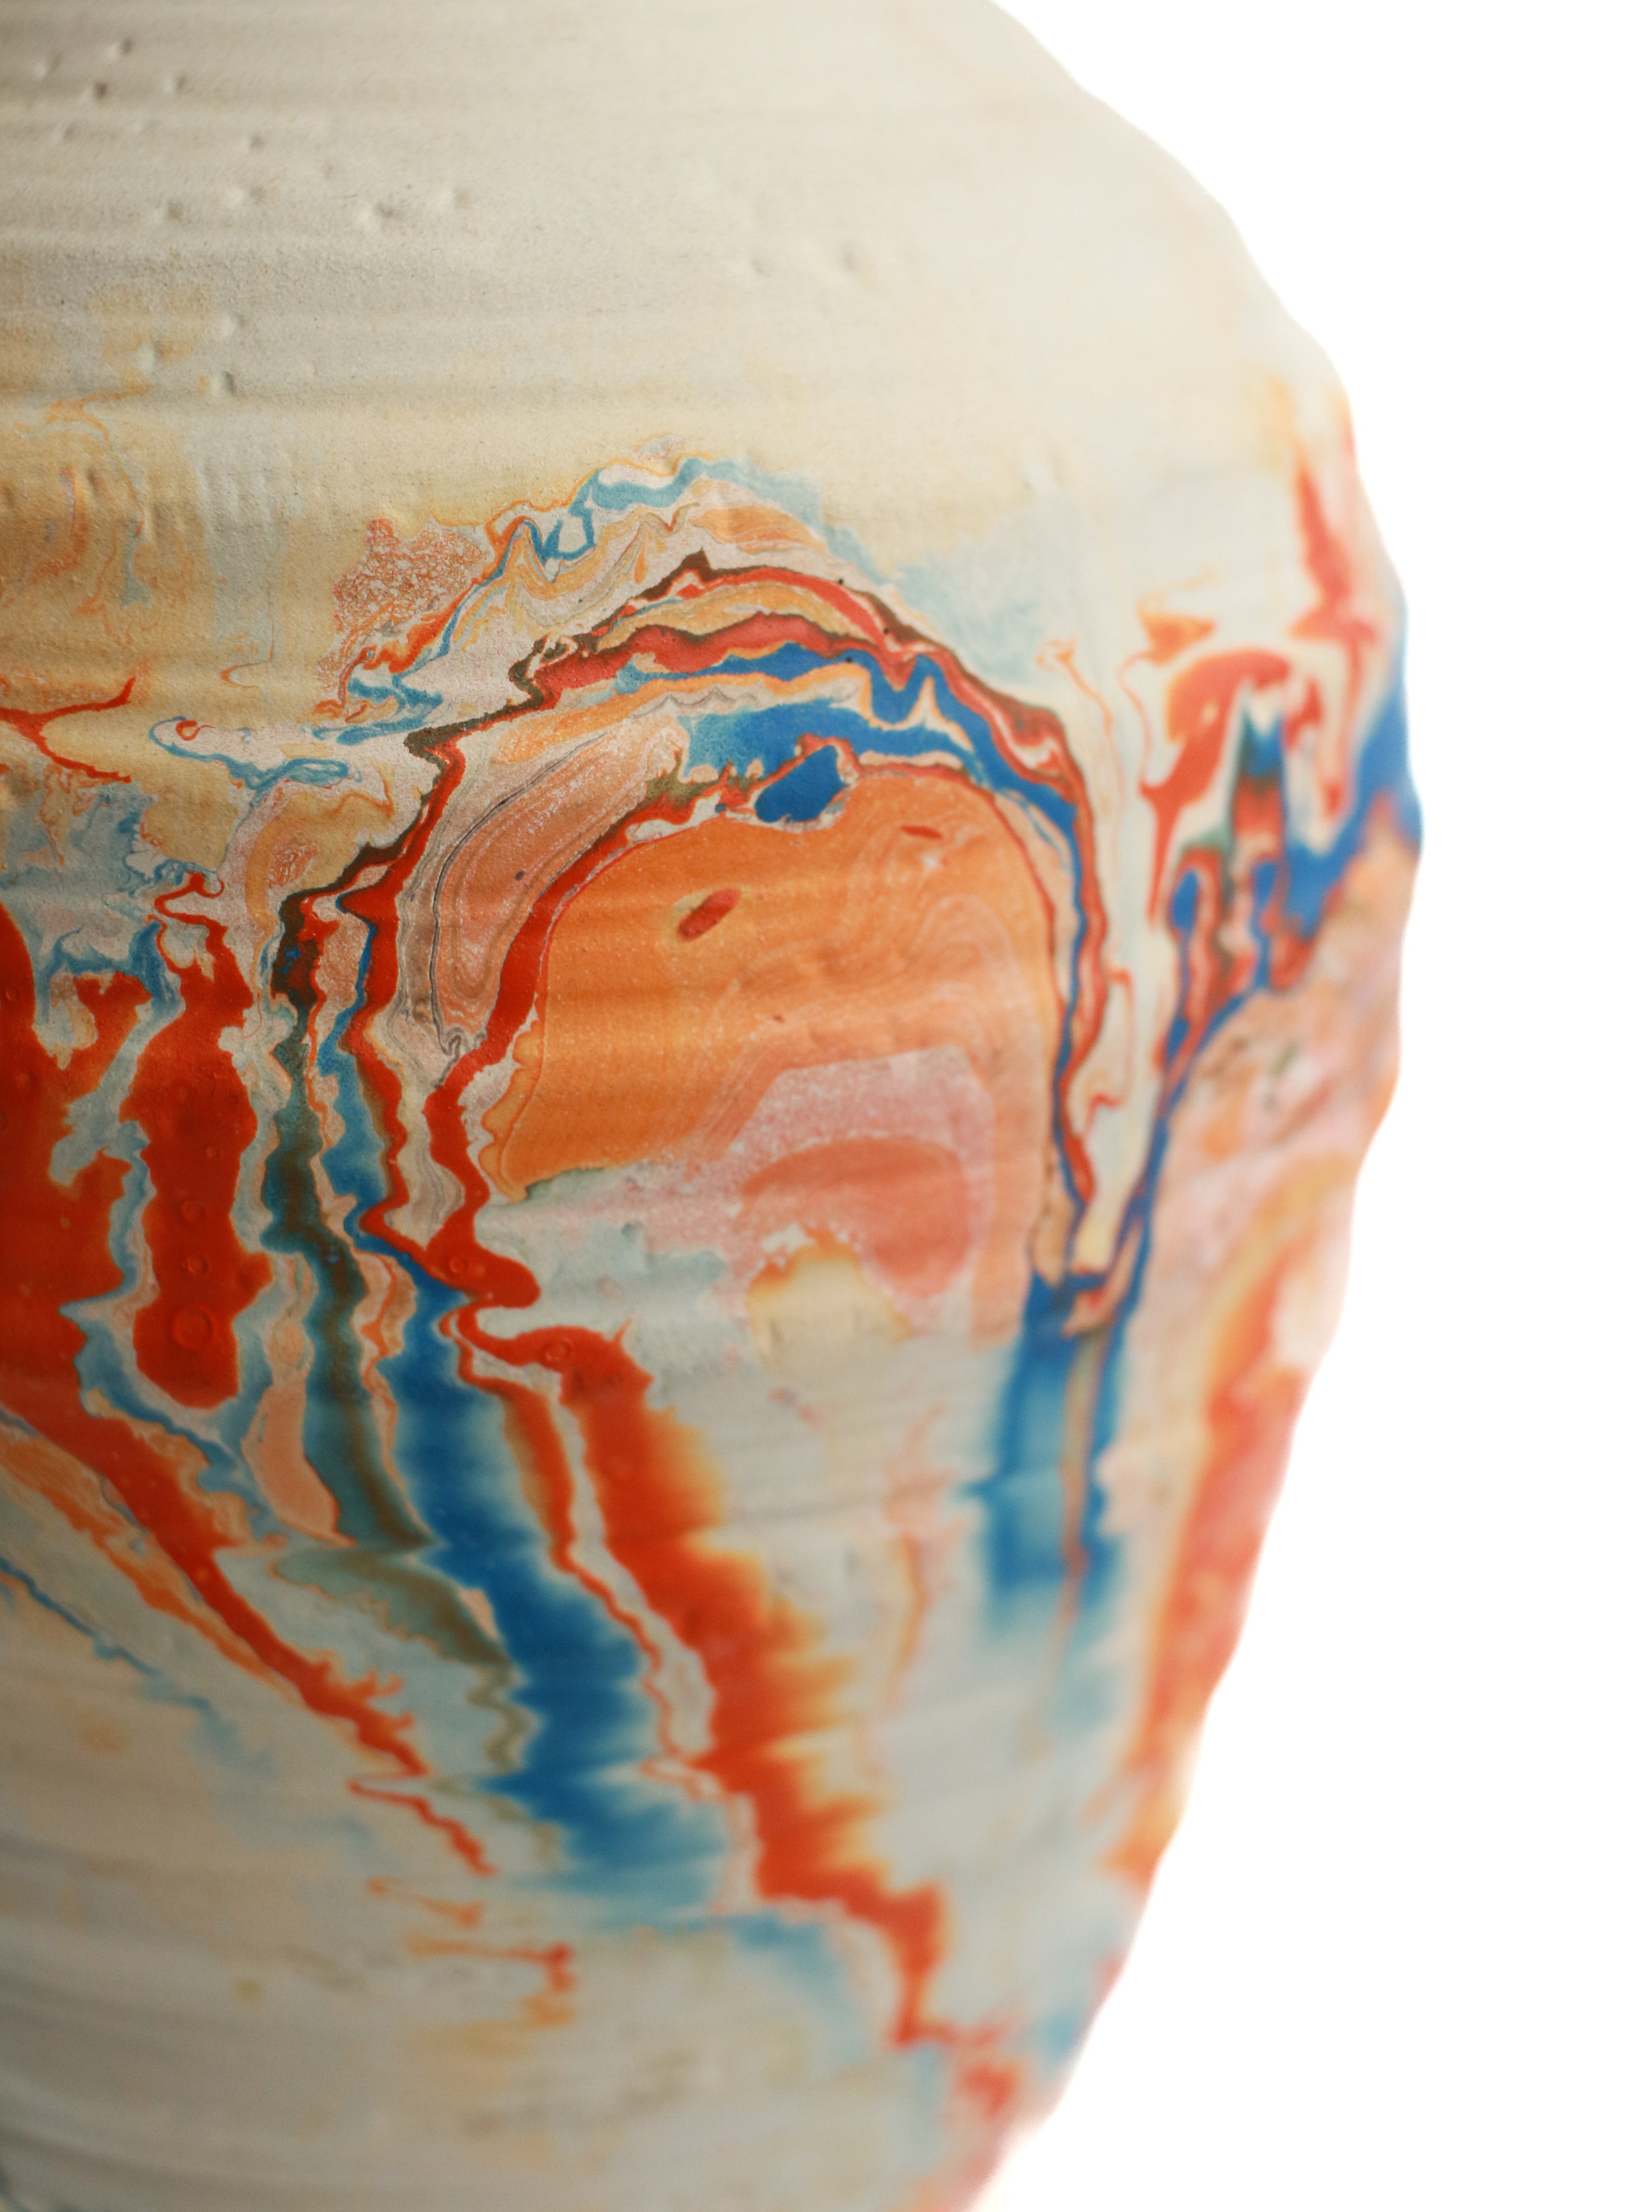 Whit's Vintage Picks - Marbled Vase